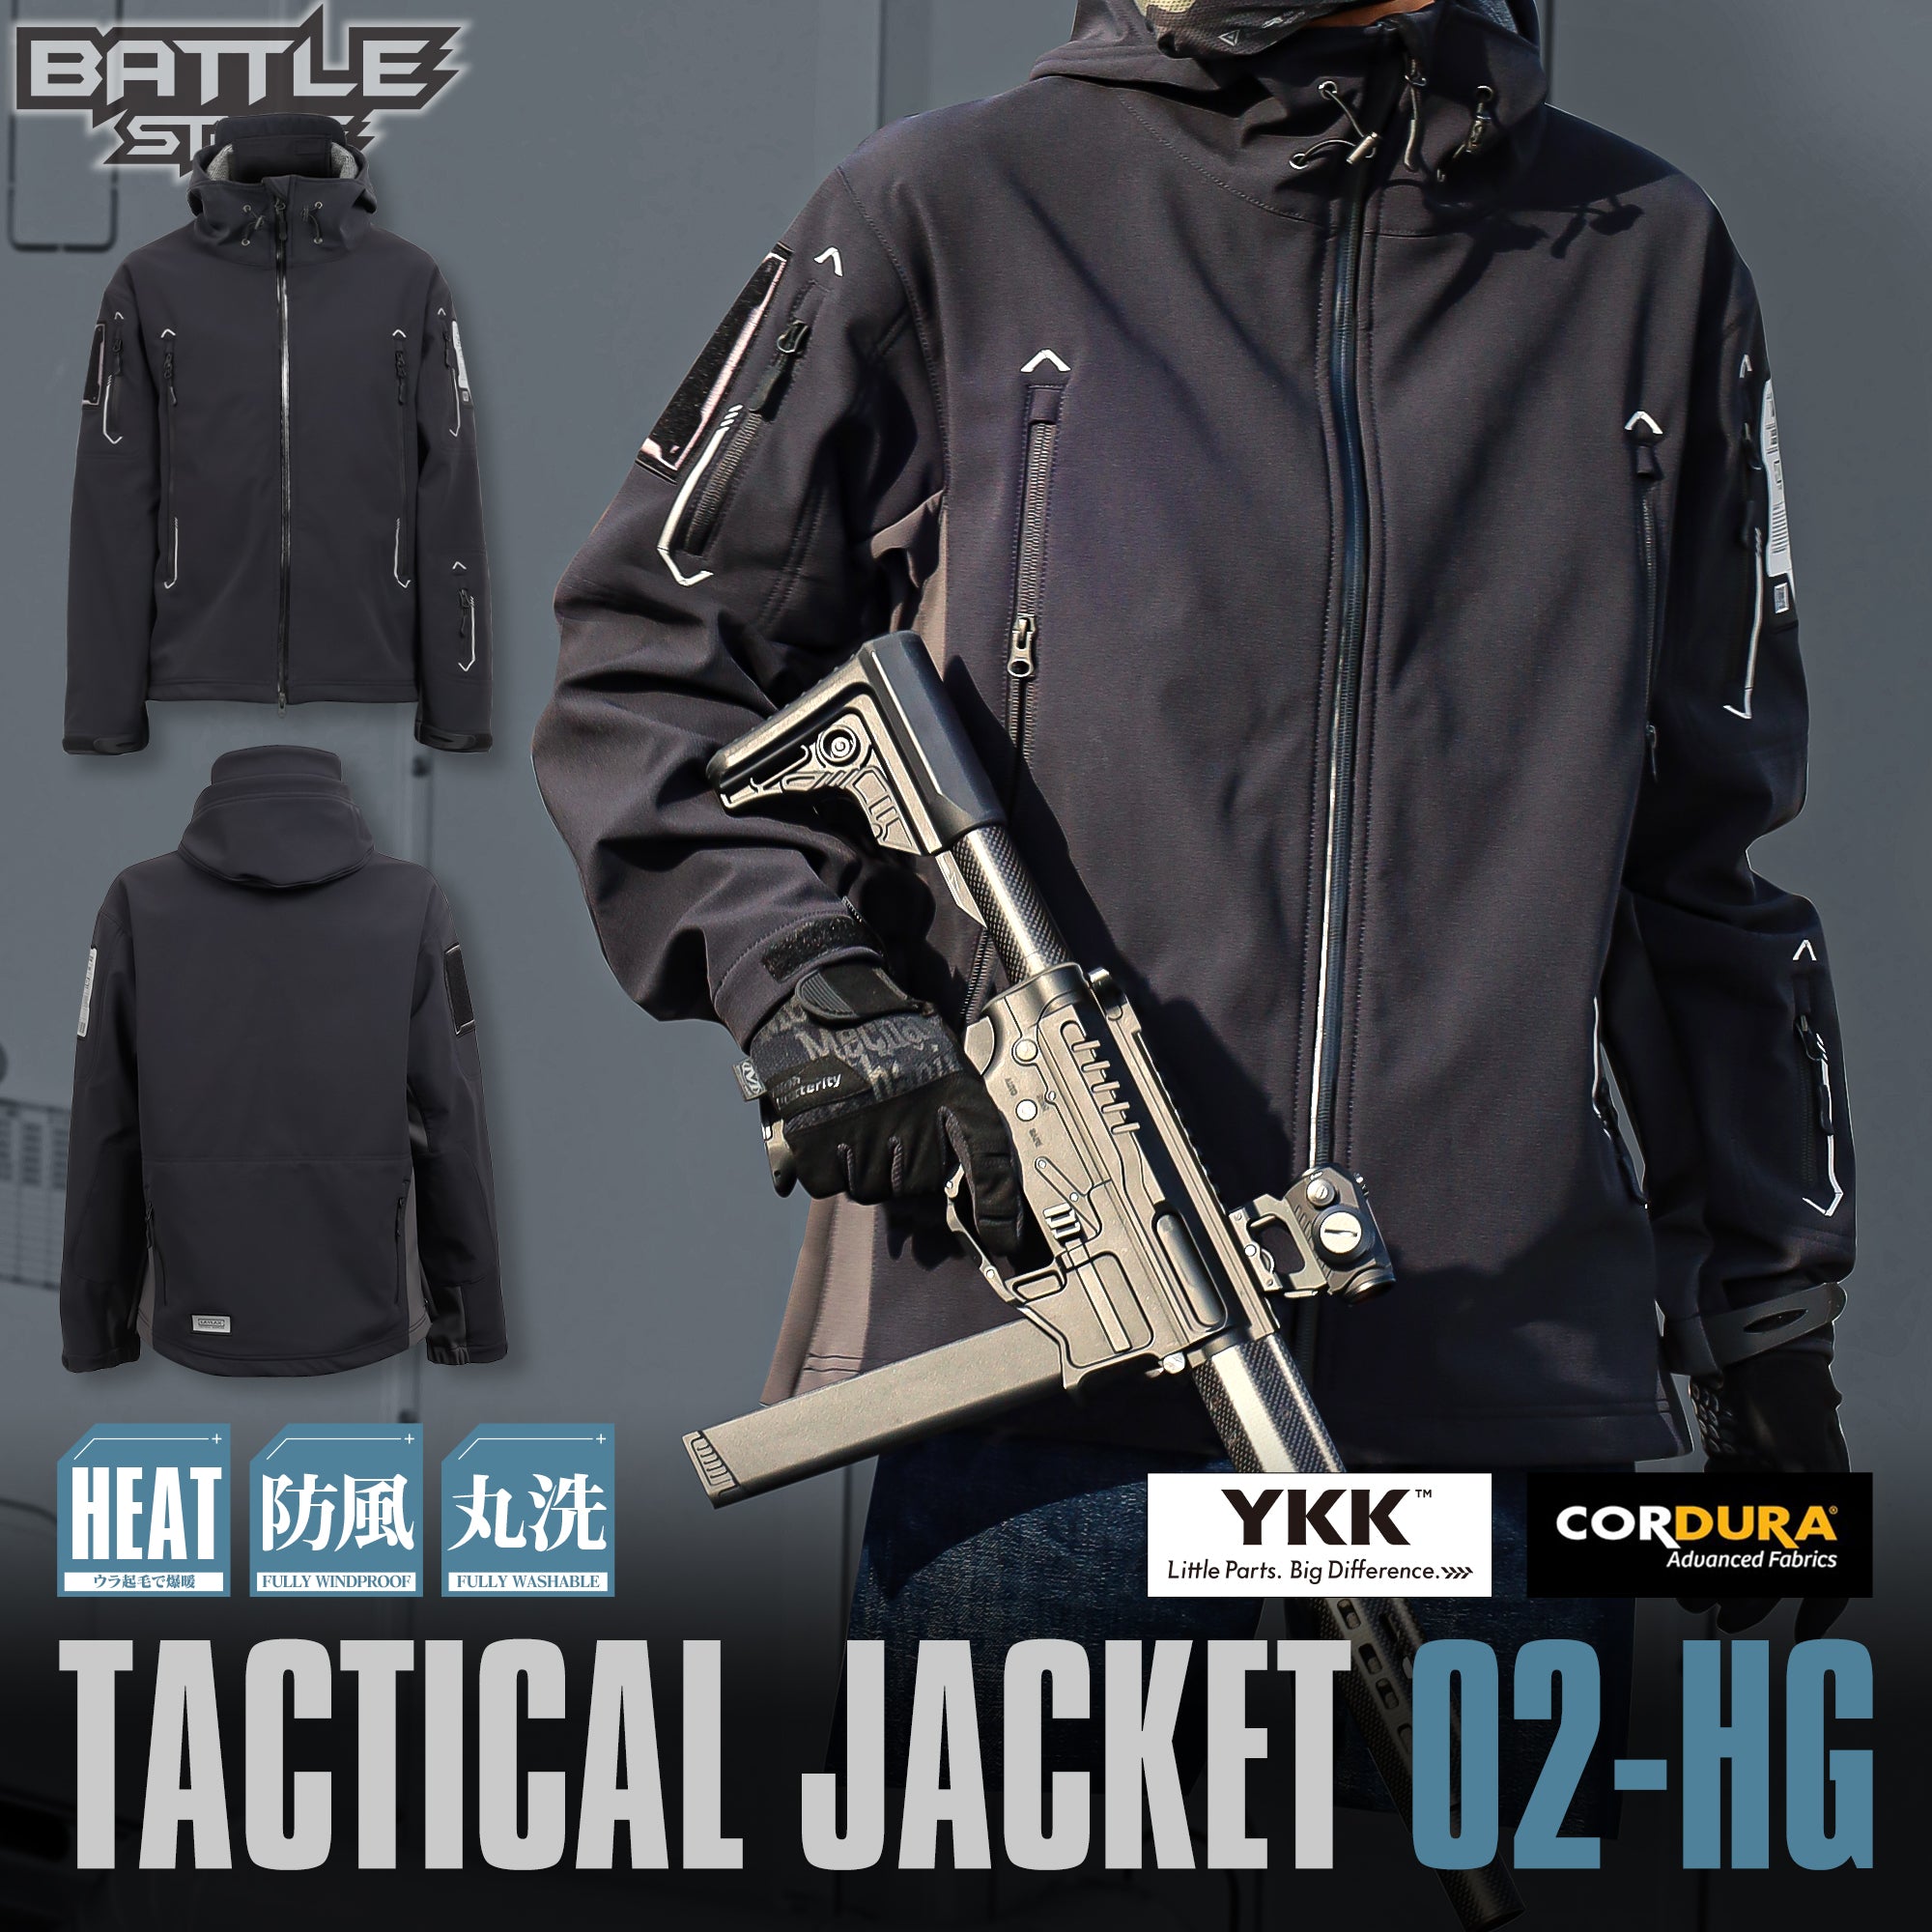 Tactical Jacket 02-HG [Battle Style]